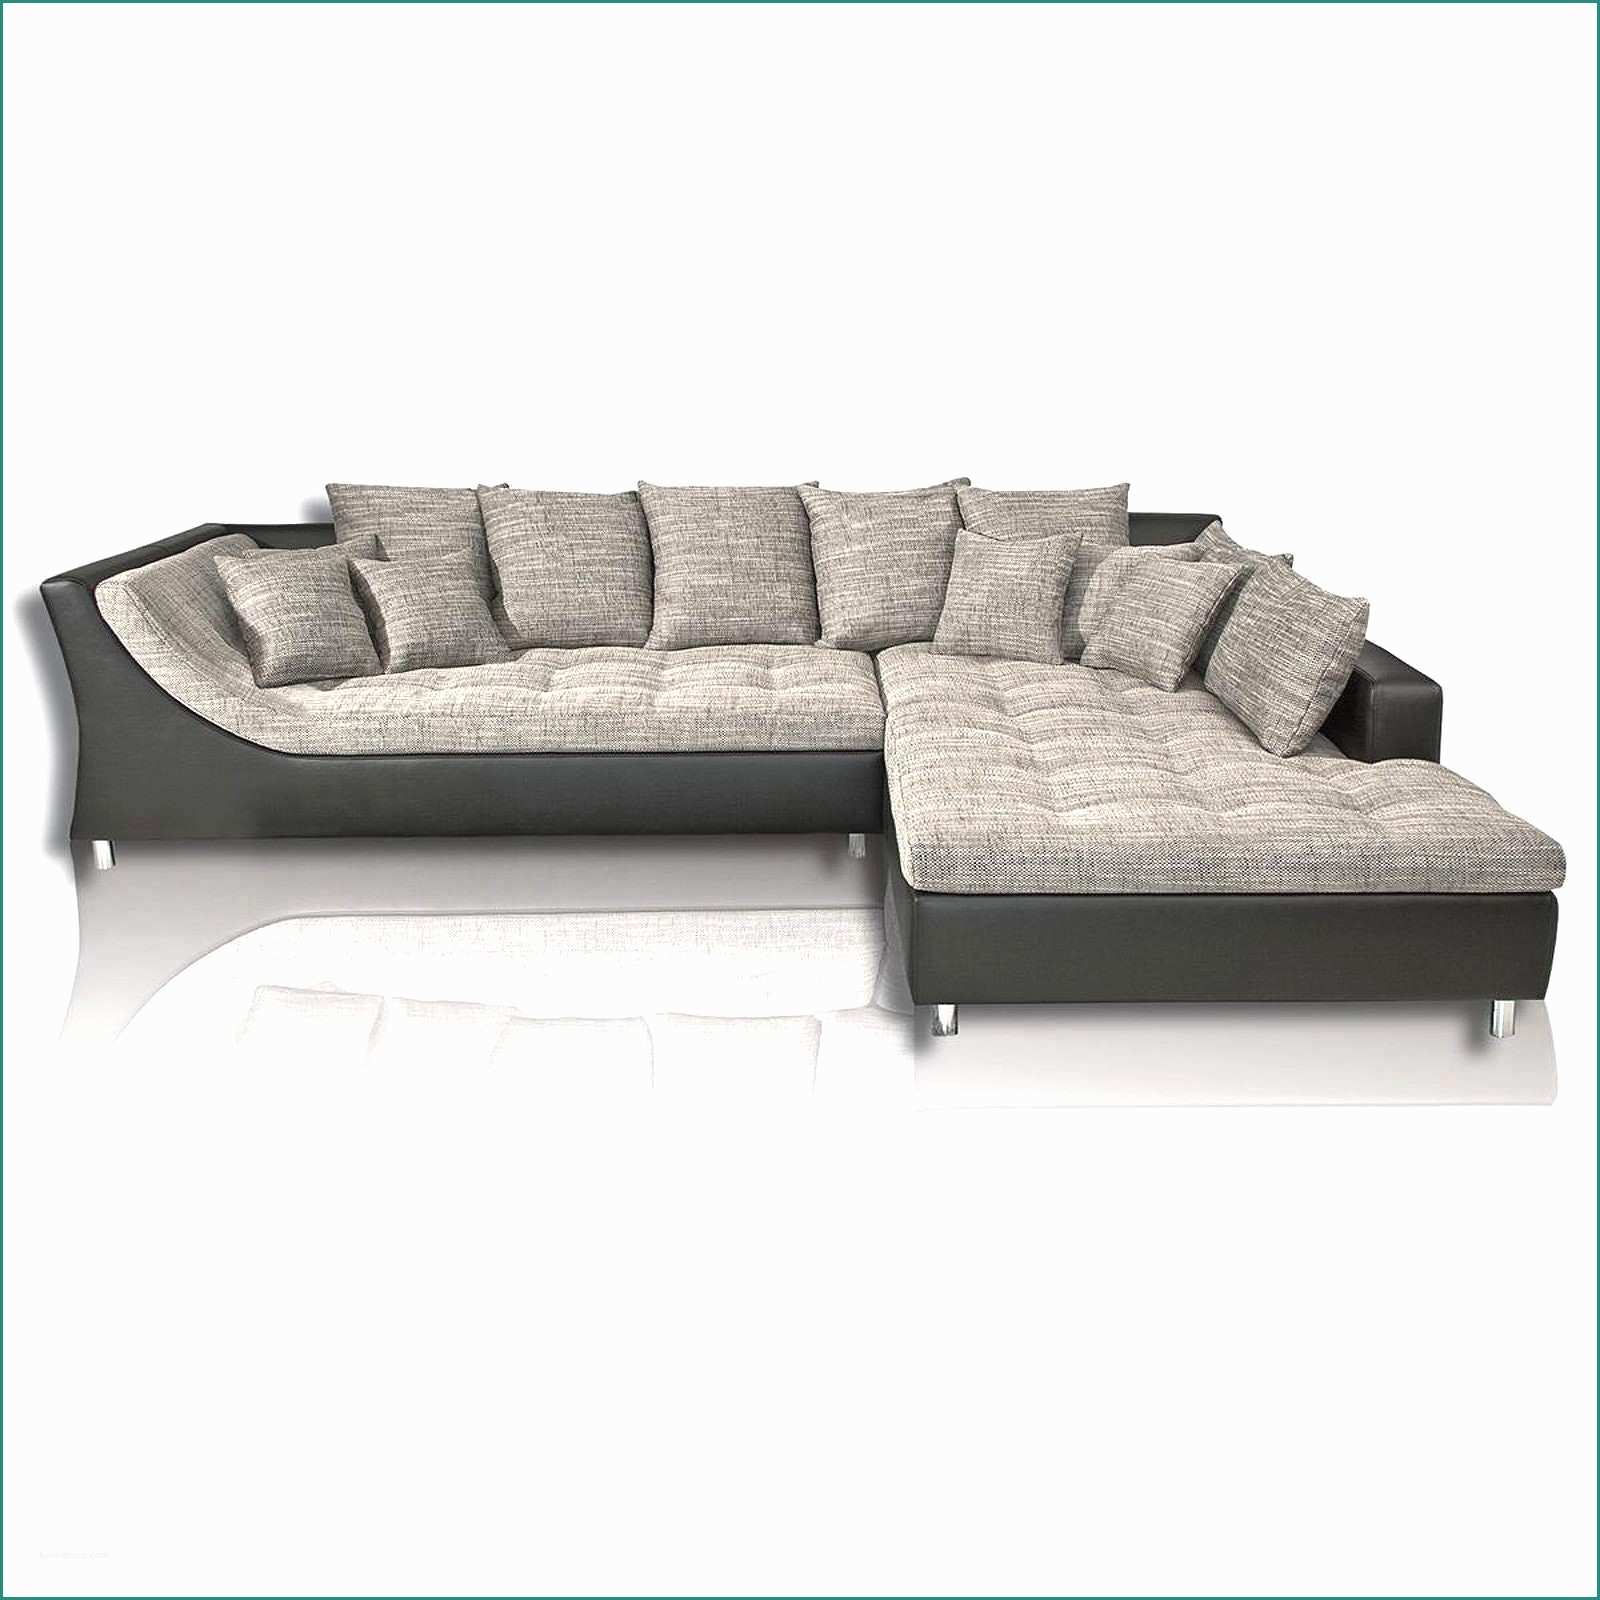 Divano Con Sceslong E sofa Chaise Longue Erta Impresionante sofas Im Angebot Full Size